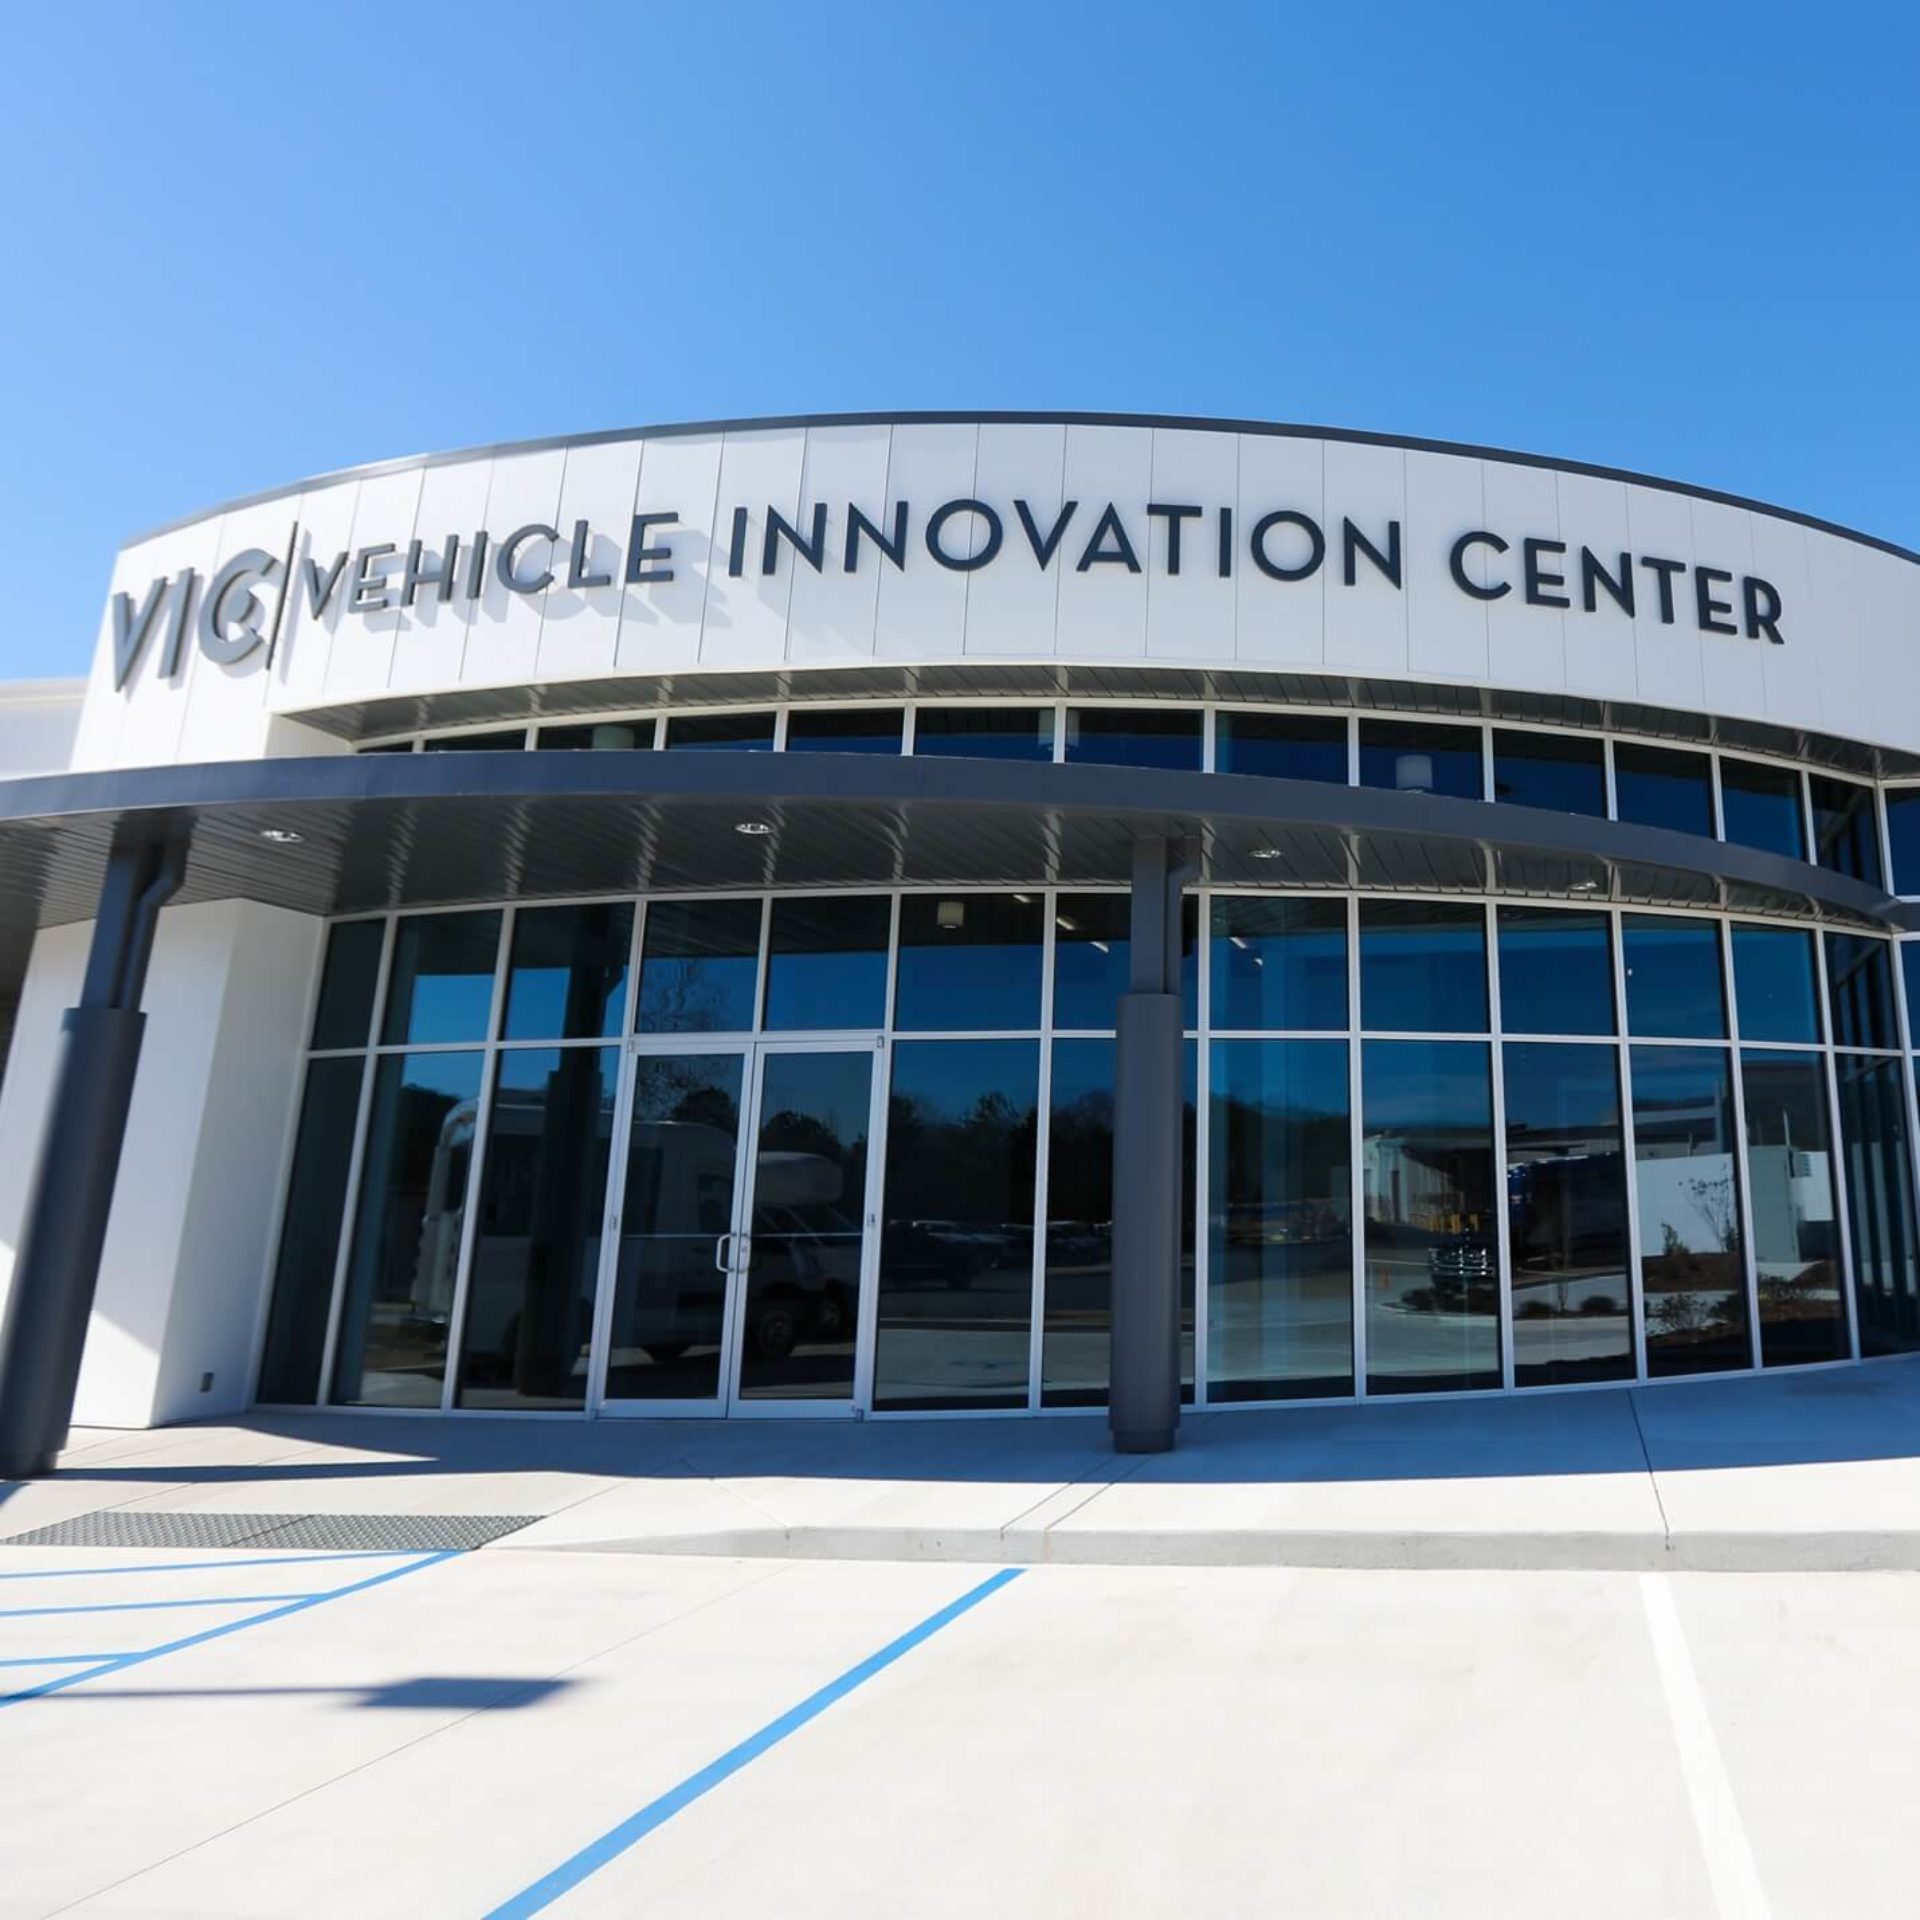 Vehicle Innovation Center Exterior